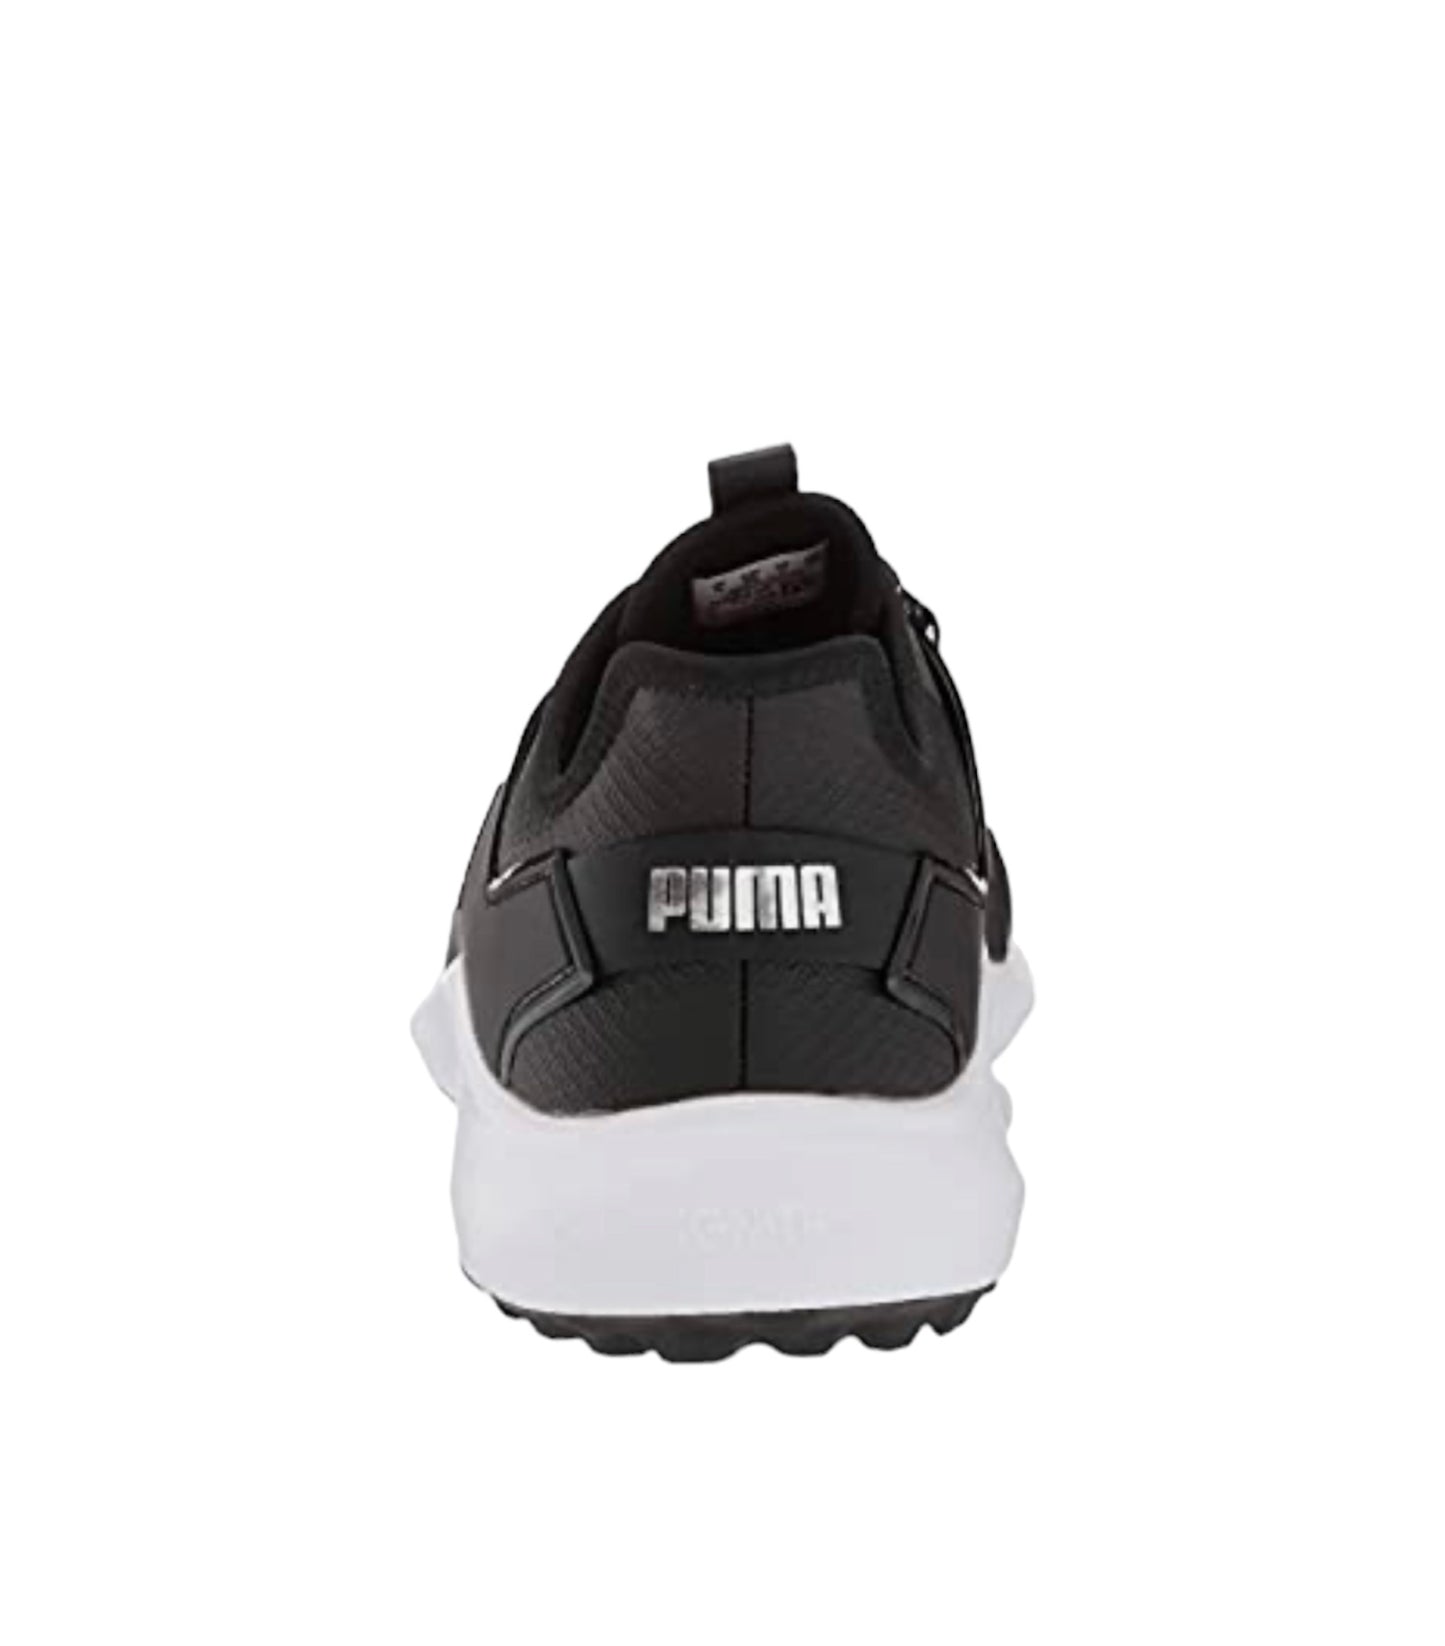 Puma Ignite Fasten8 Men’s Golf Shoe - Black